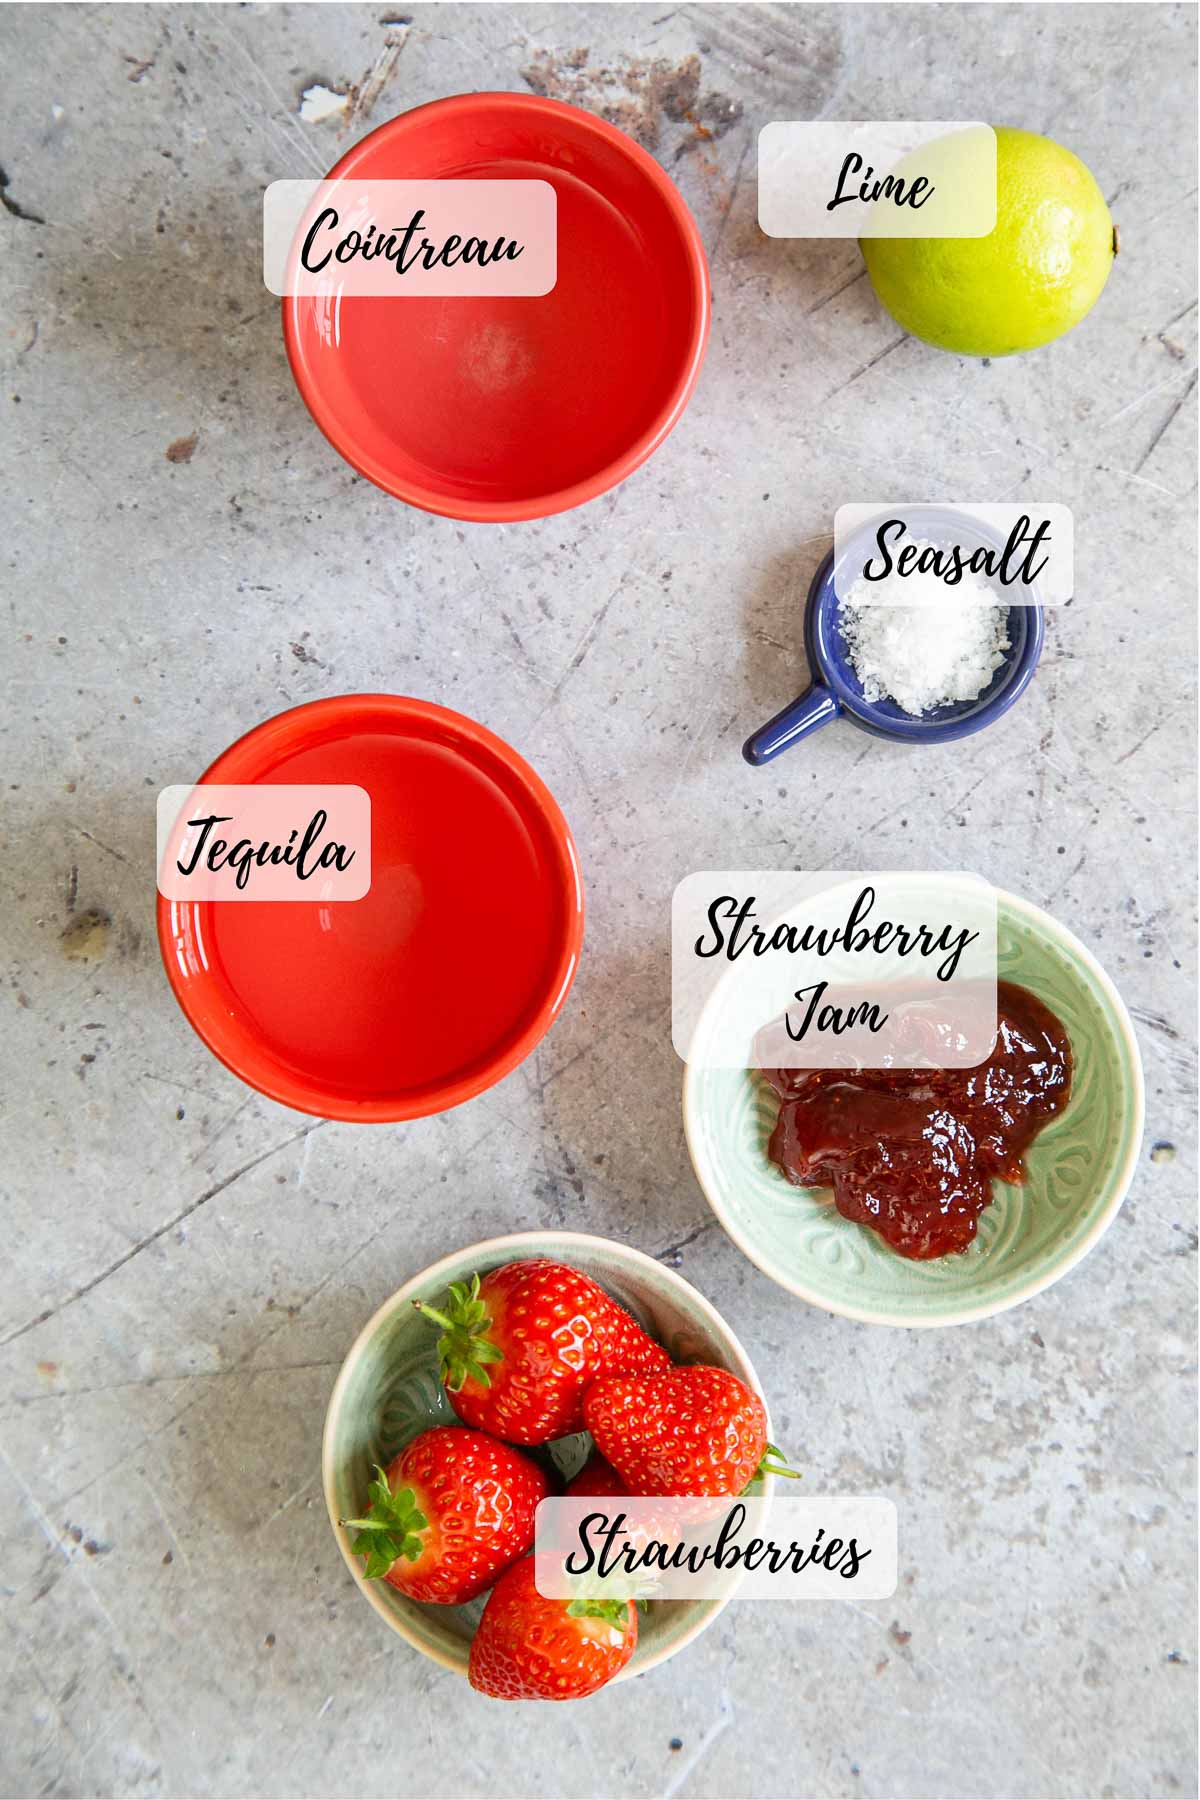 Ingredients: cointreau, lime, salt, strawberry jam, fresh strawberries, tequila